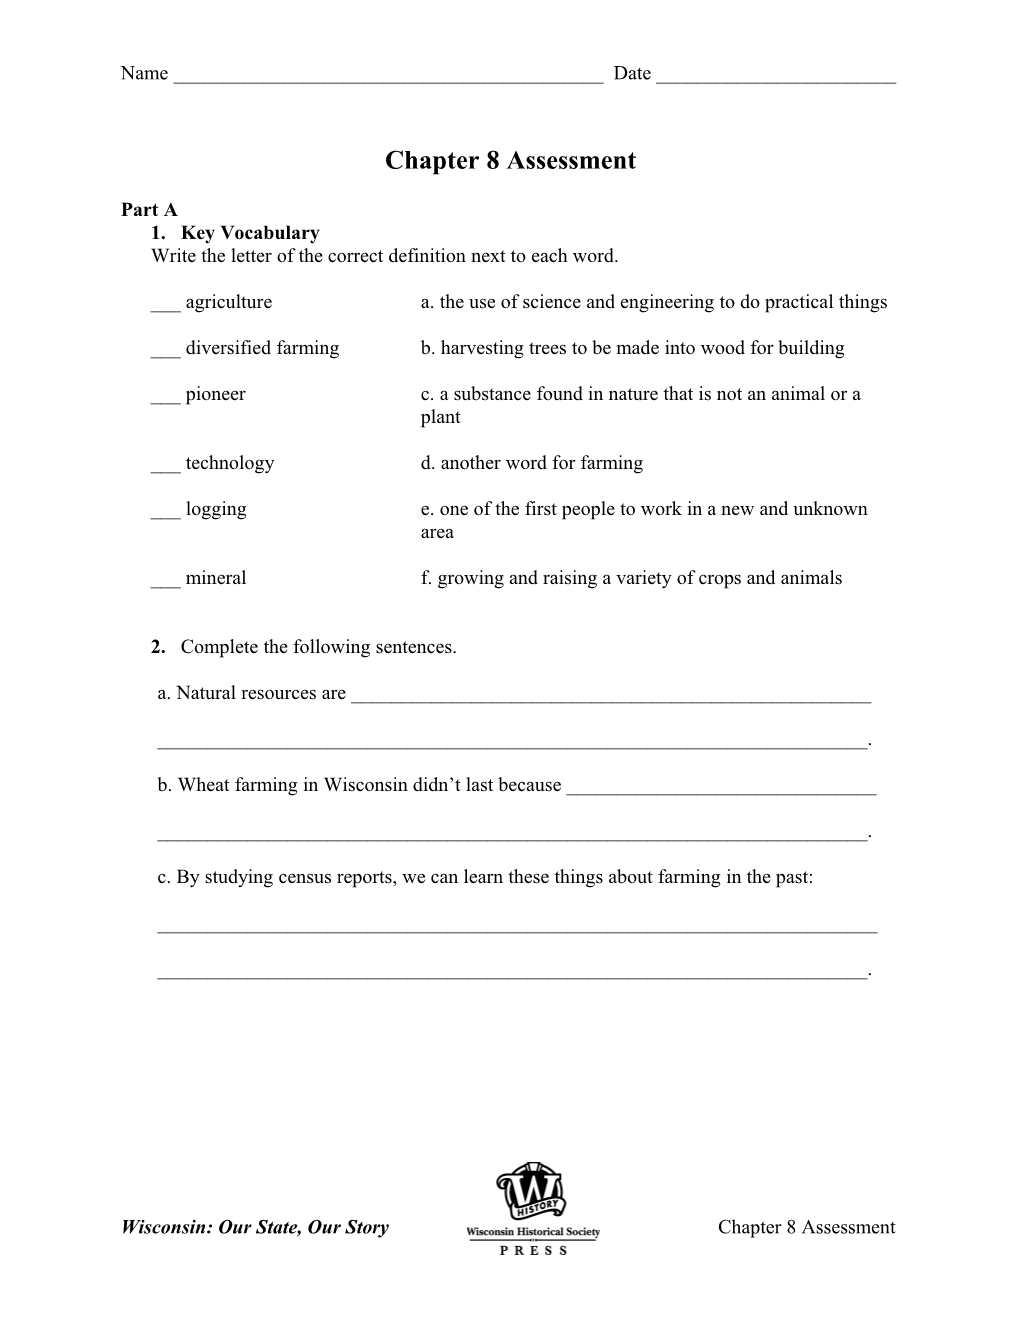 Chapter 8 Assessment